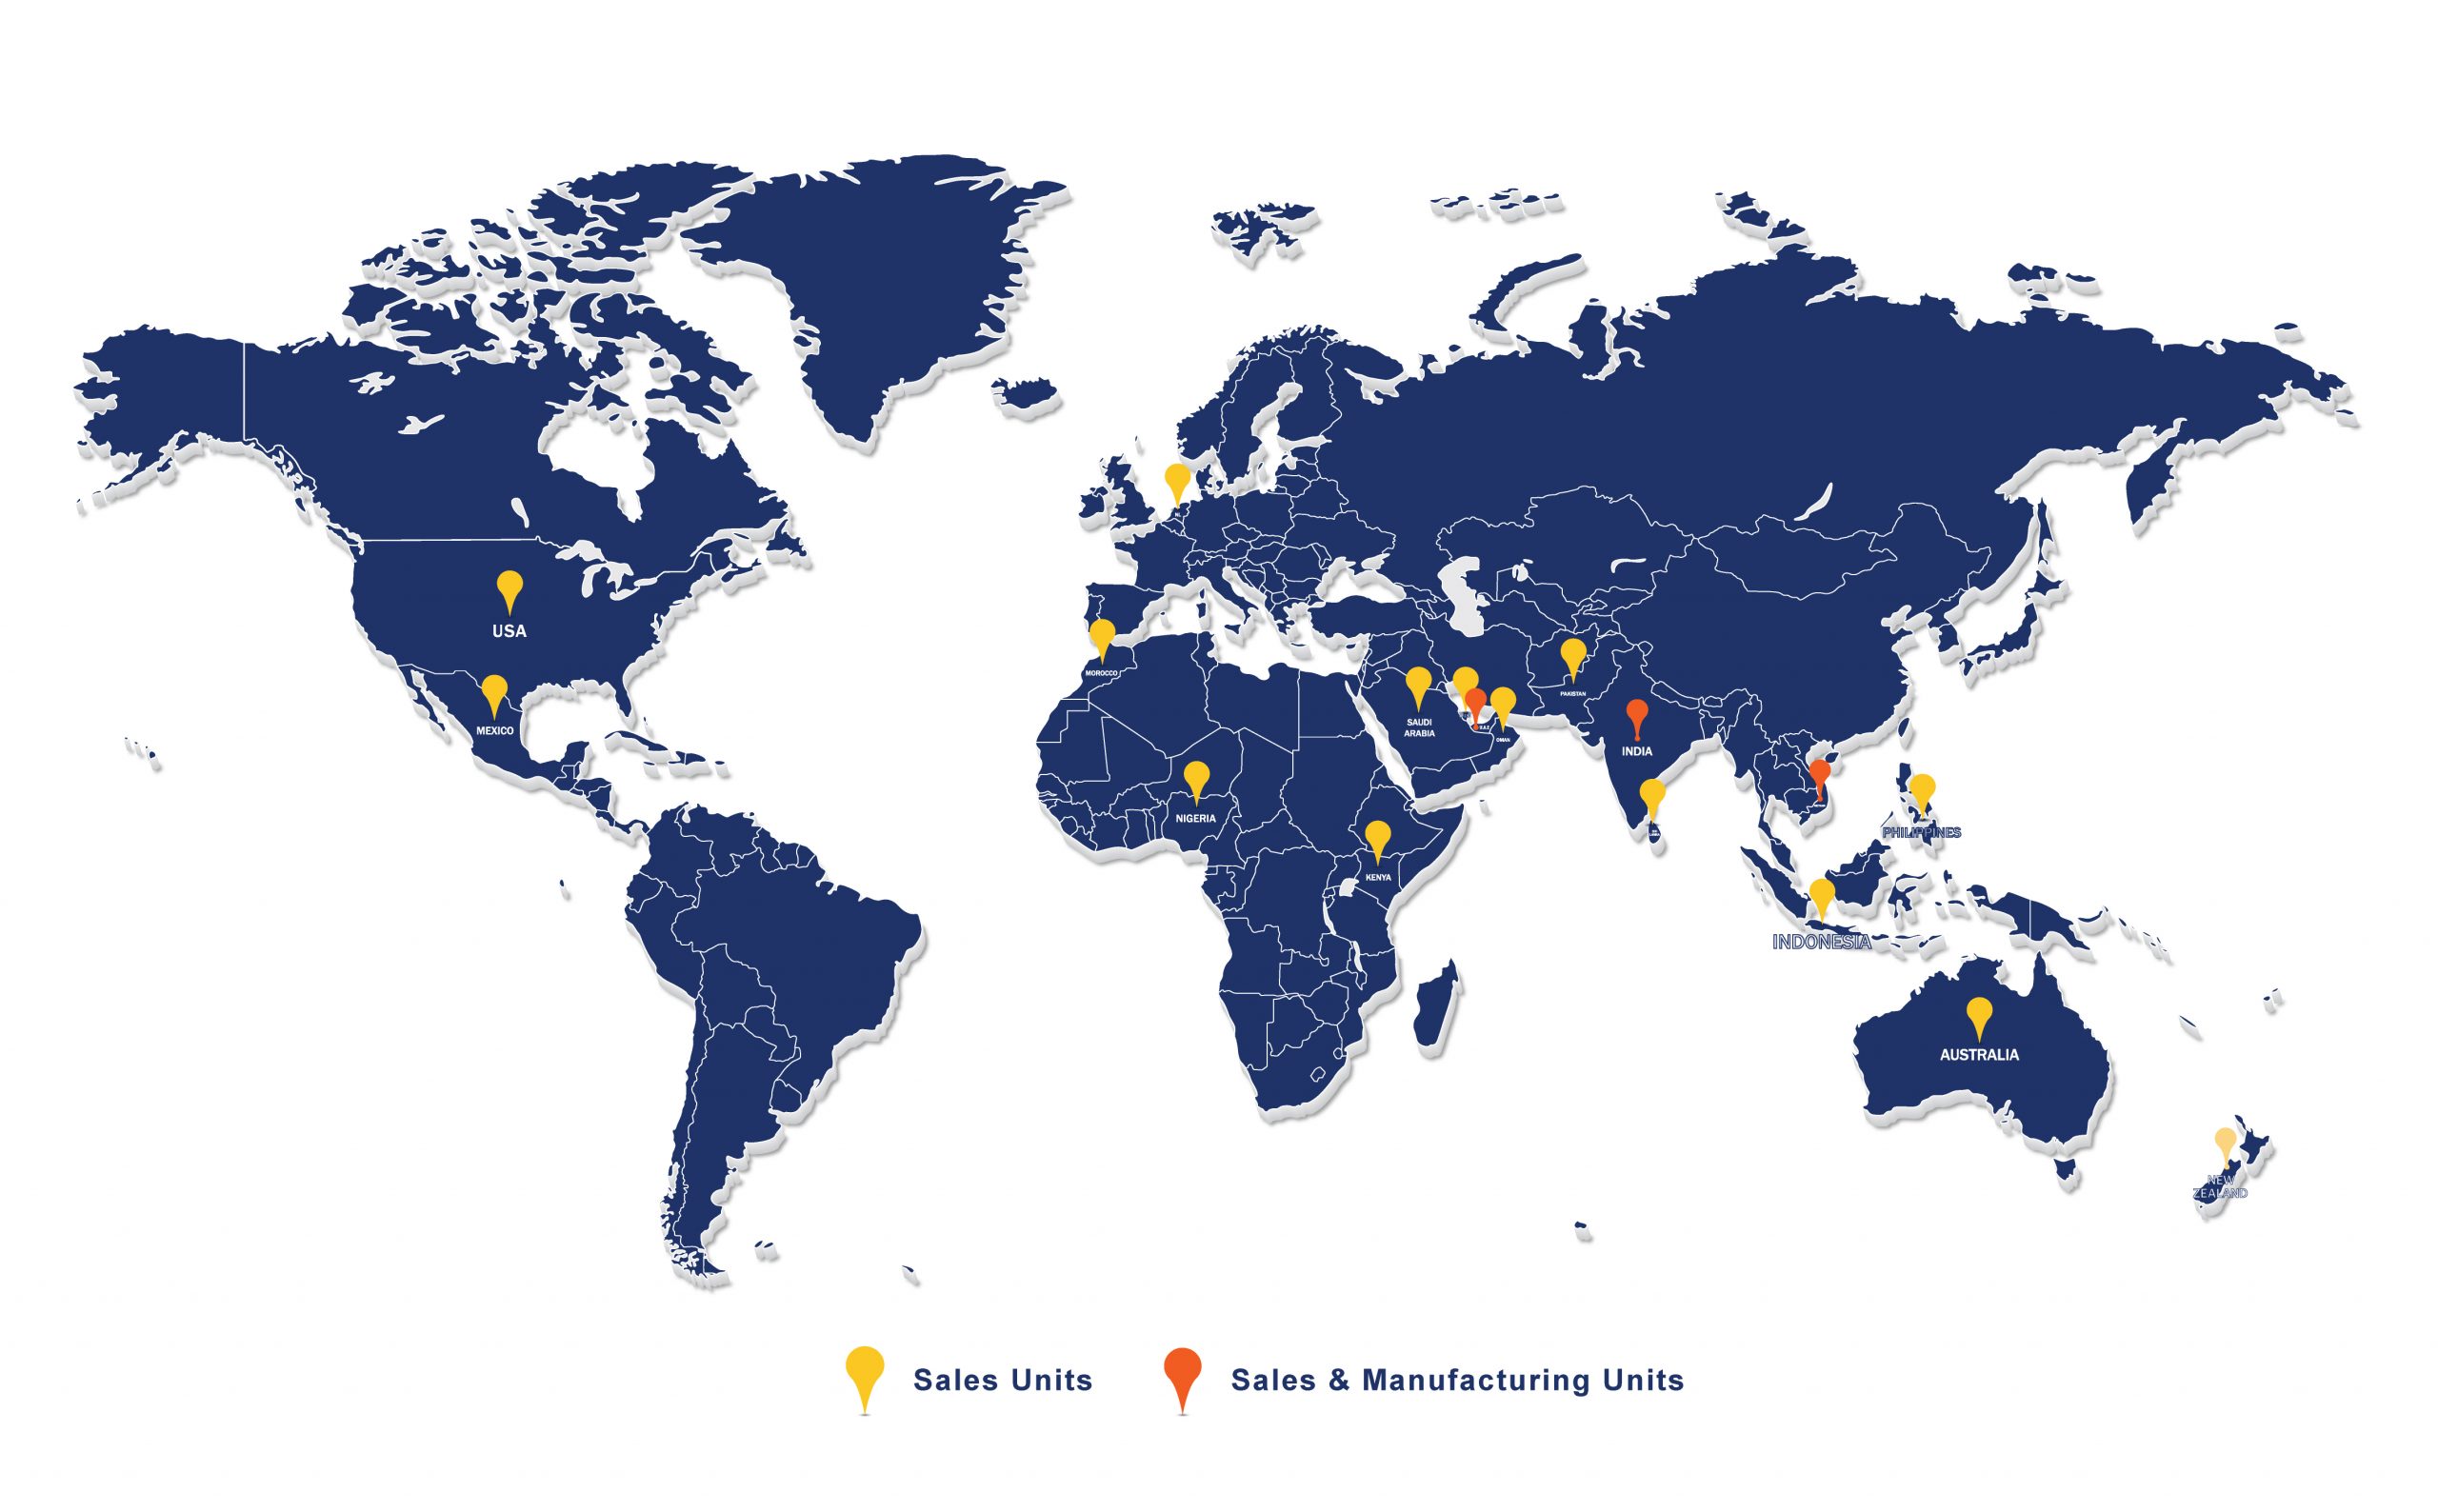 Hira Industries Global World Map - 2020